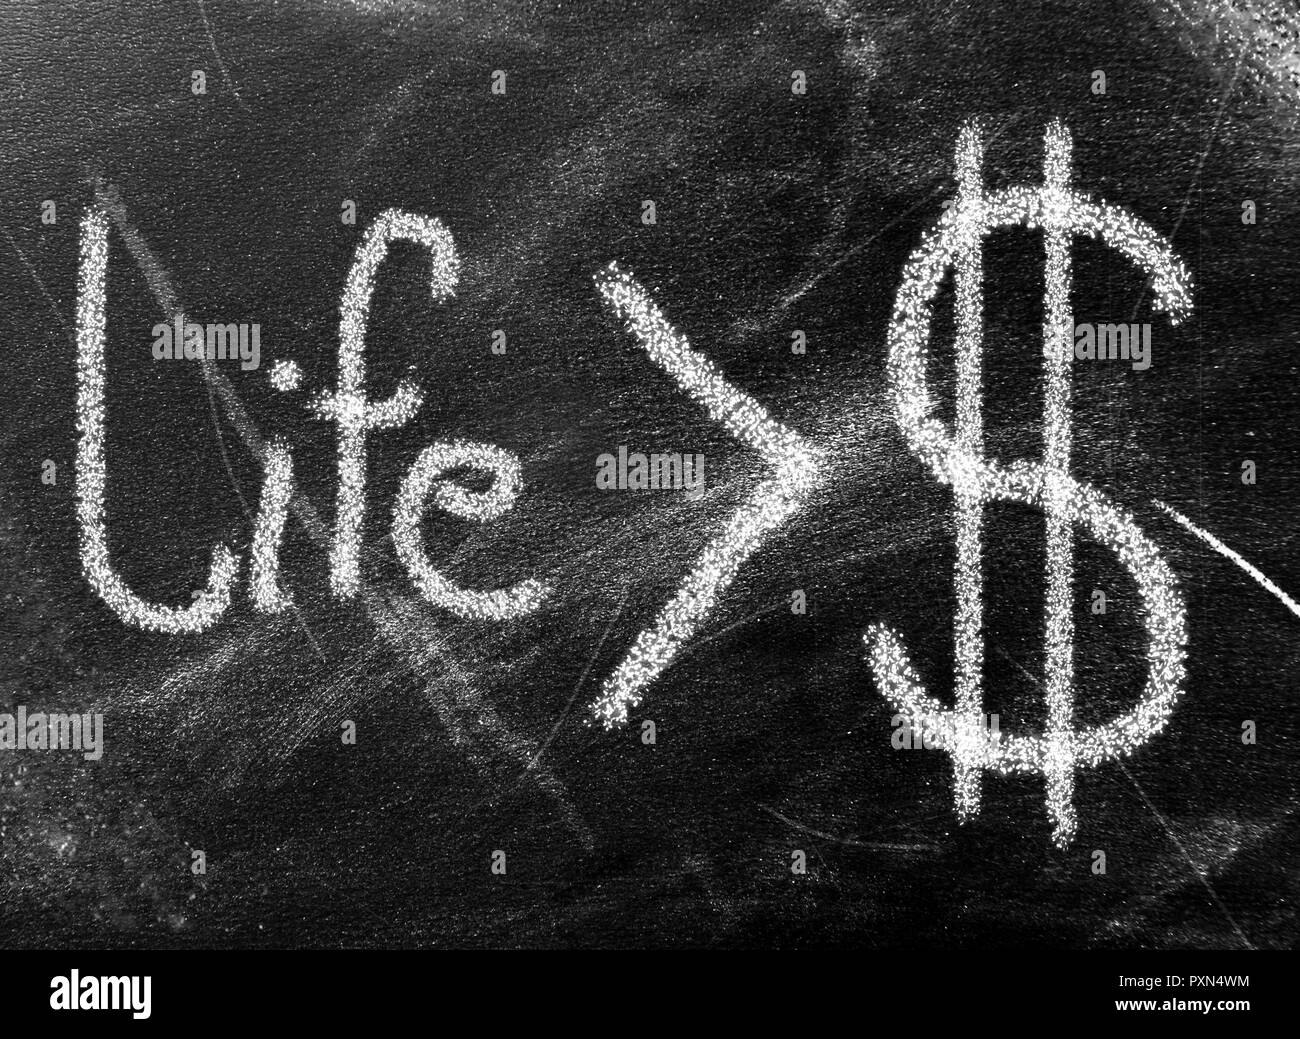 Money Concept Life Is More Than Money Stock Photo Alamy